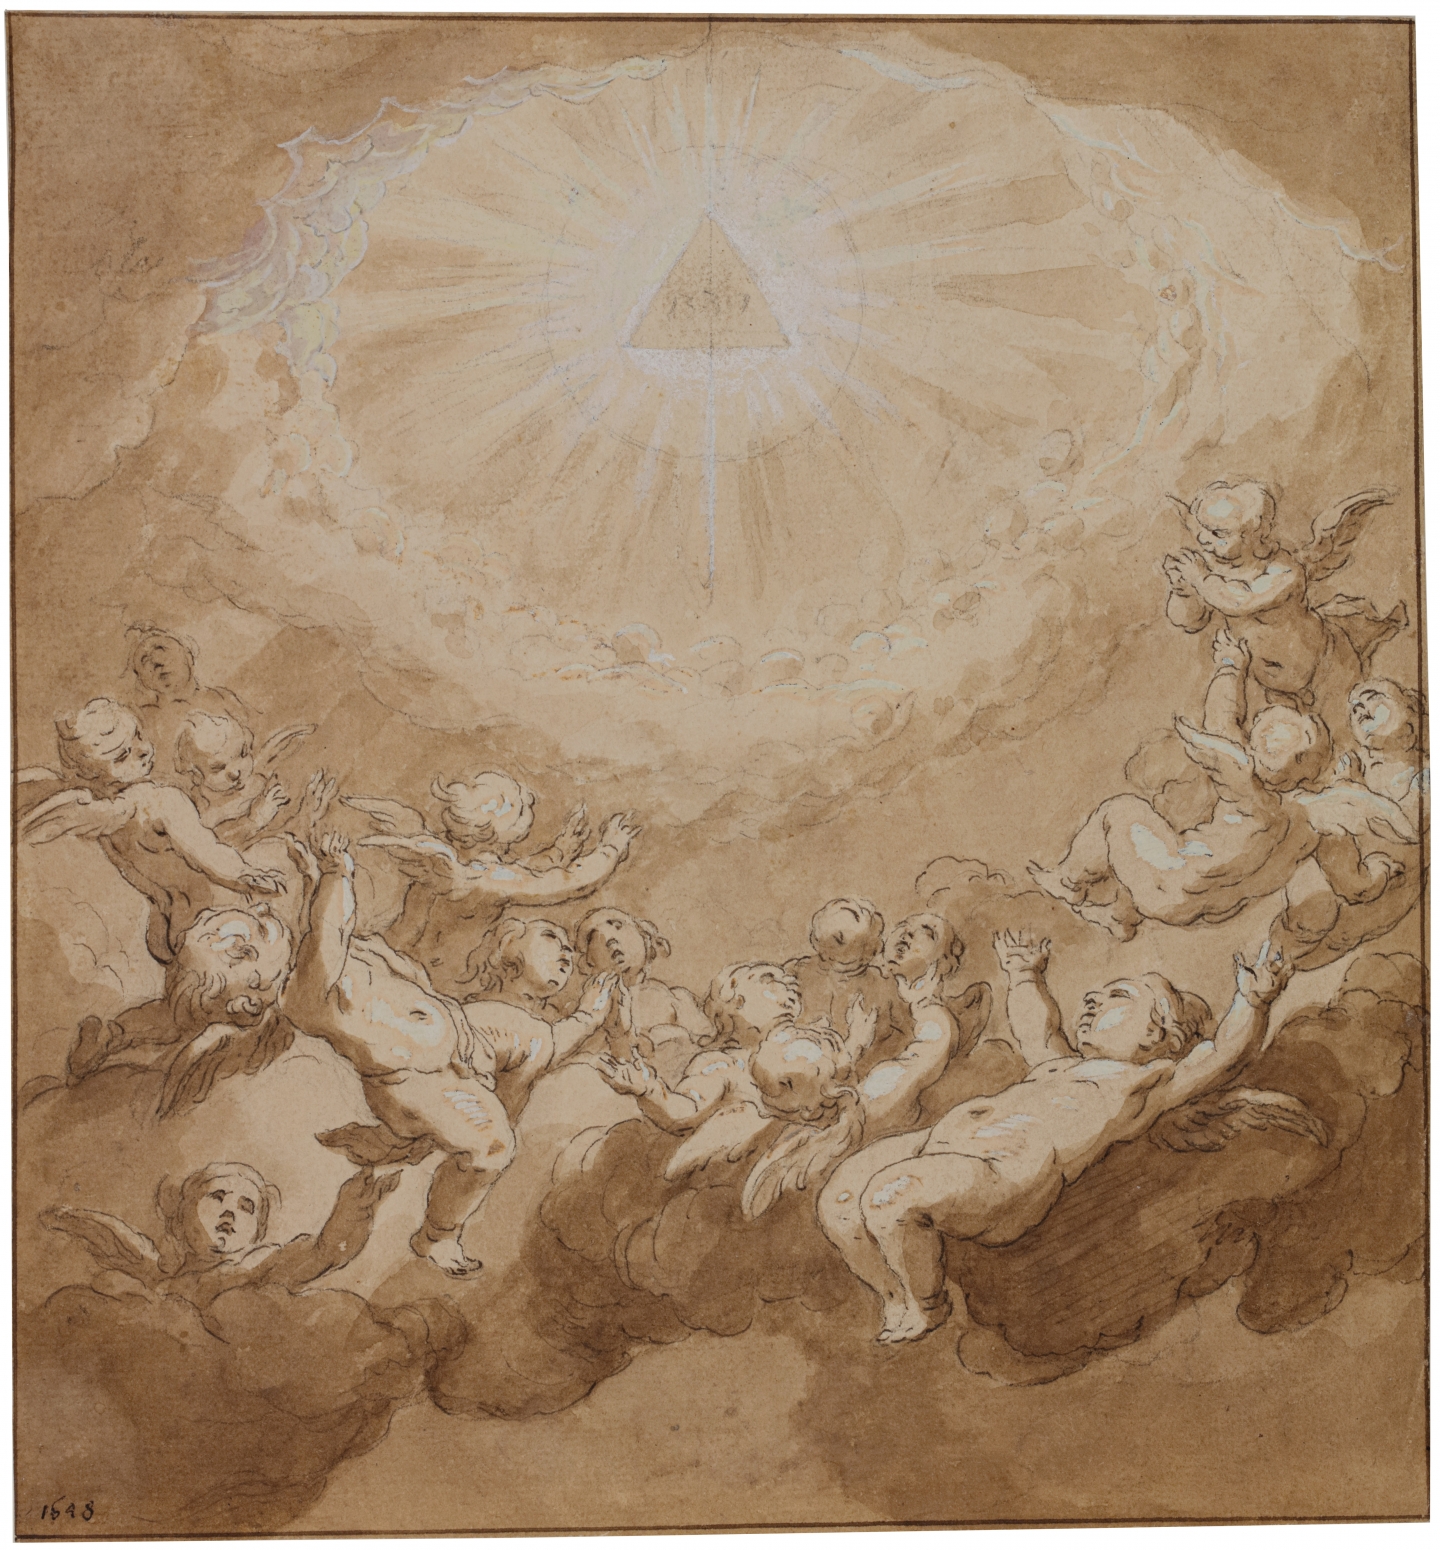 Abraham Bloemaert (Gorinchem 1566-1651 Utrecht) The Tetragrammaton as a Symbol of God the Father in a Glory of winged Children-Angels (1648)